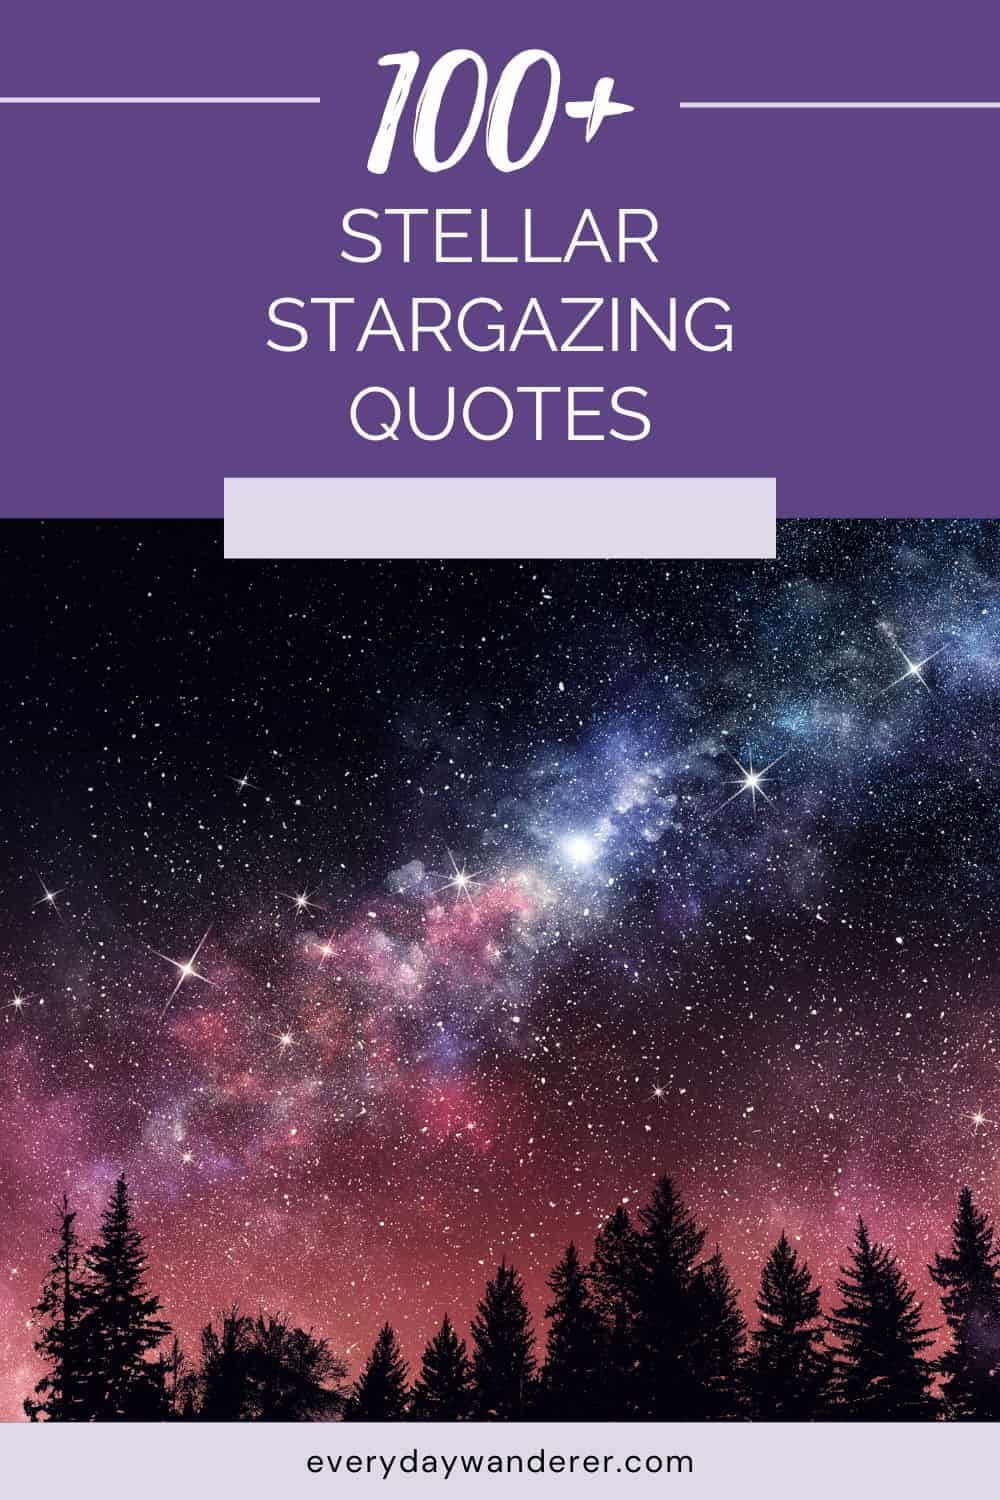 Stargazing Quotes - Pin 15 - JPG